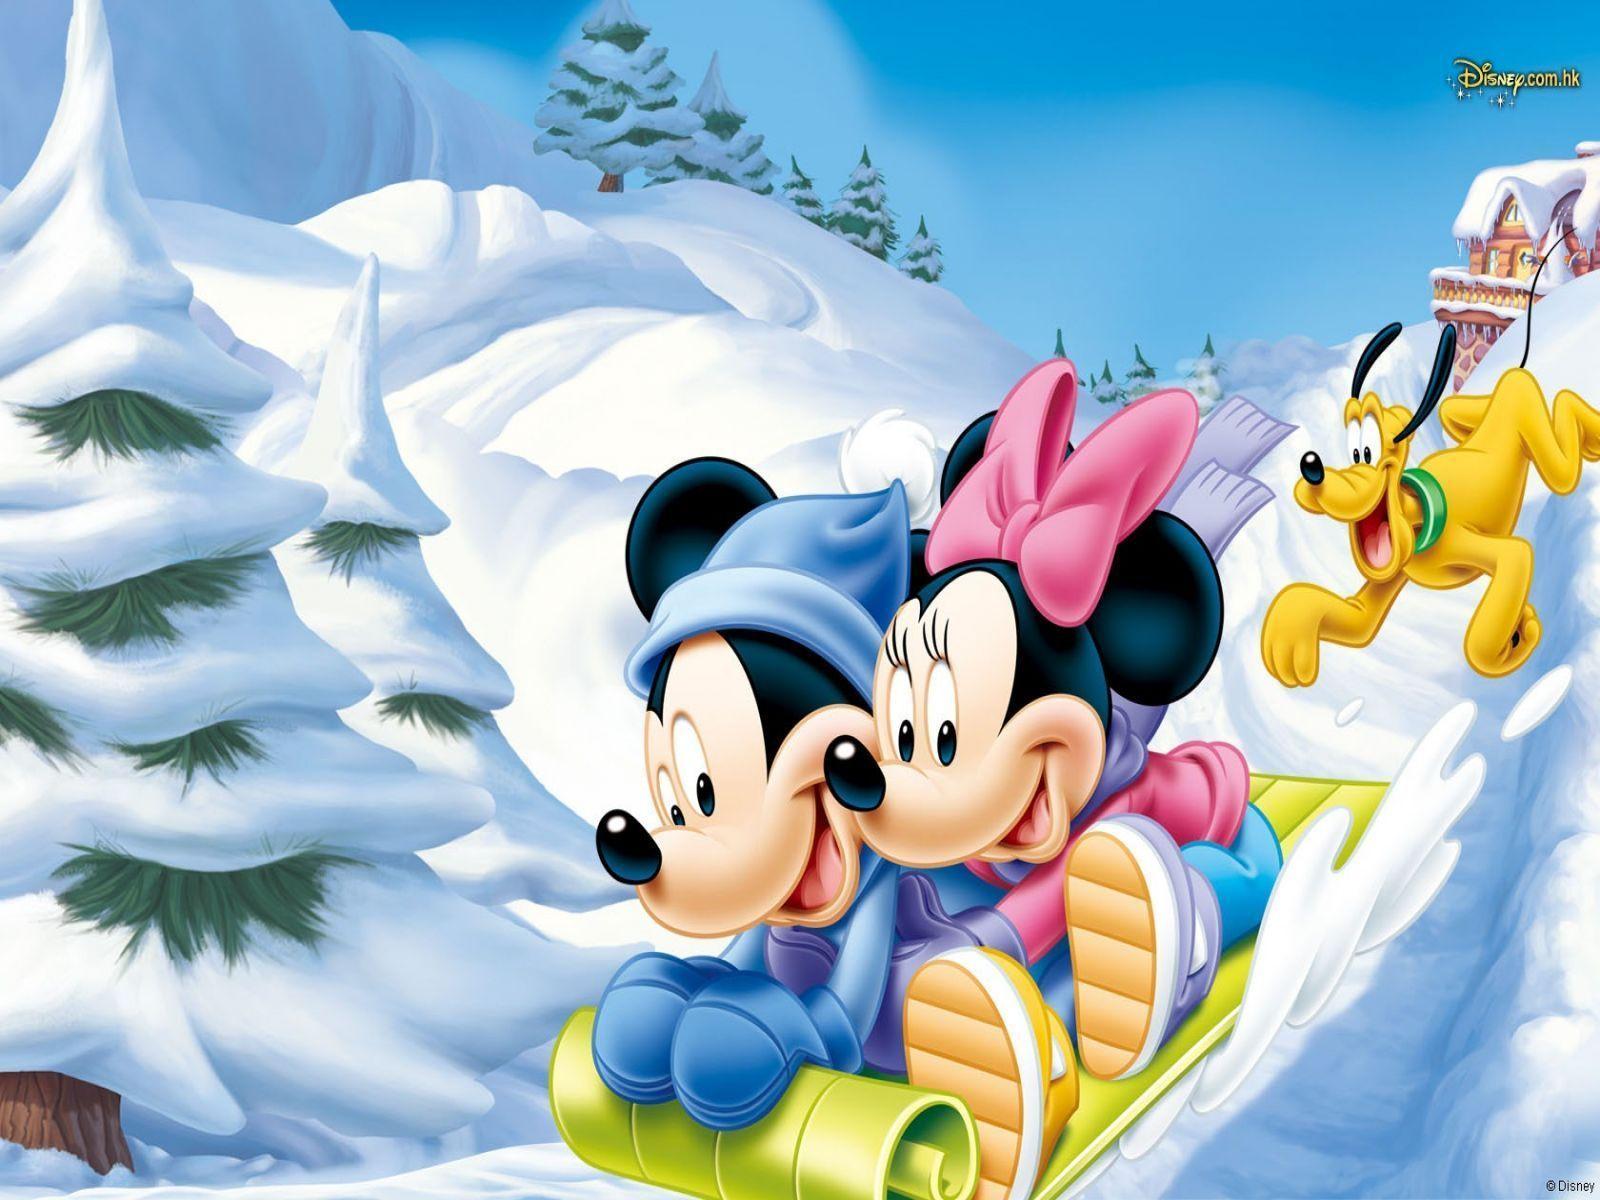 Disney Winter Wallpaper